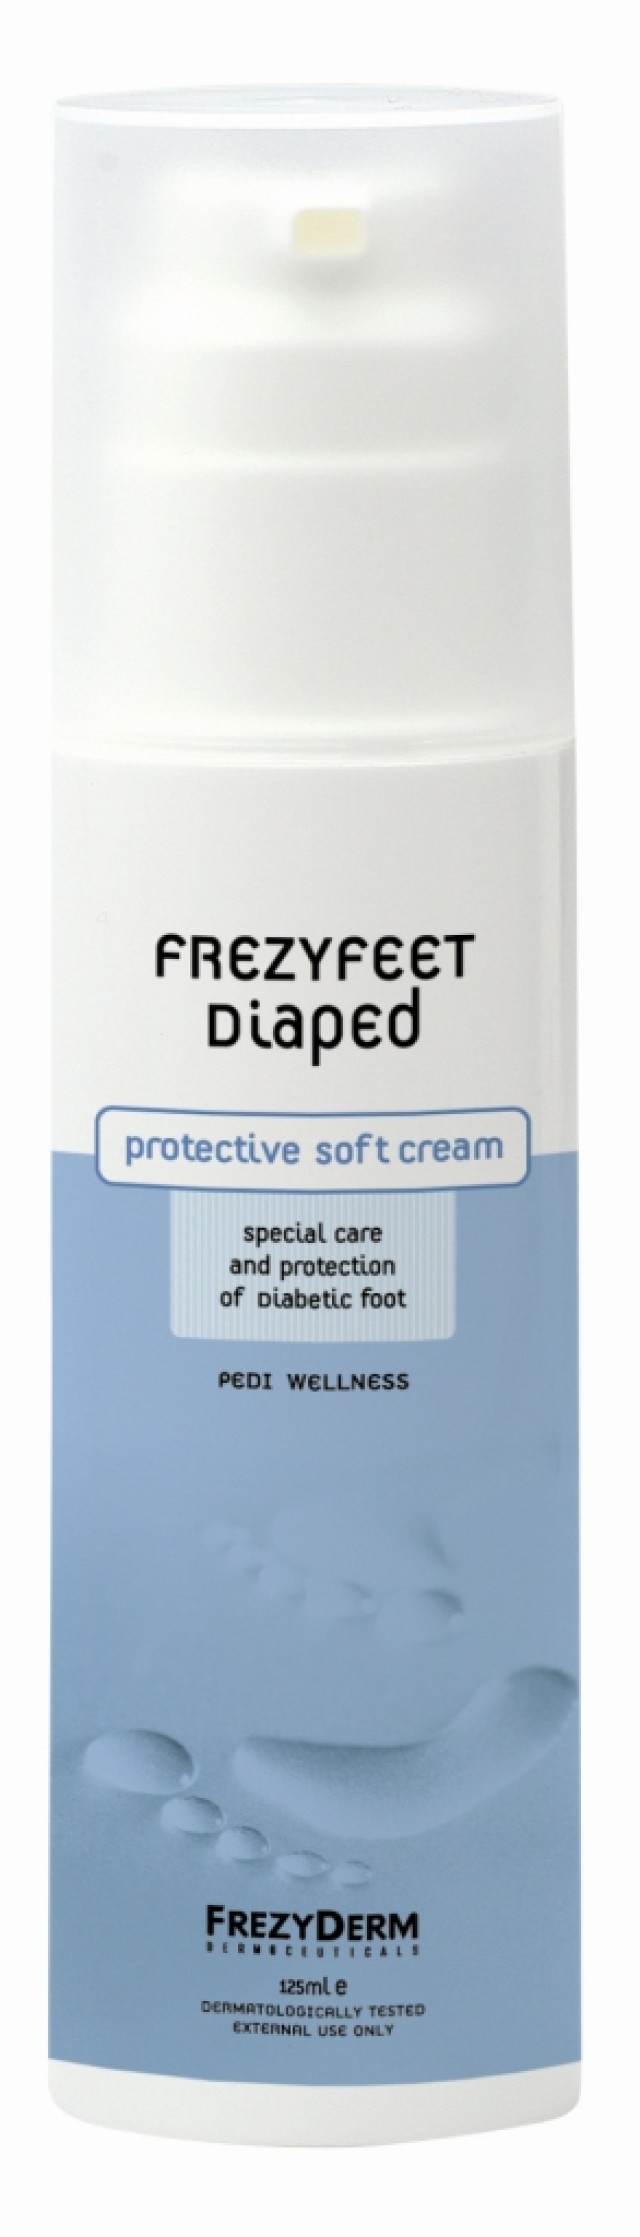 Frezyderm Frezyfeet Diaped Cream 125 ml product photo